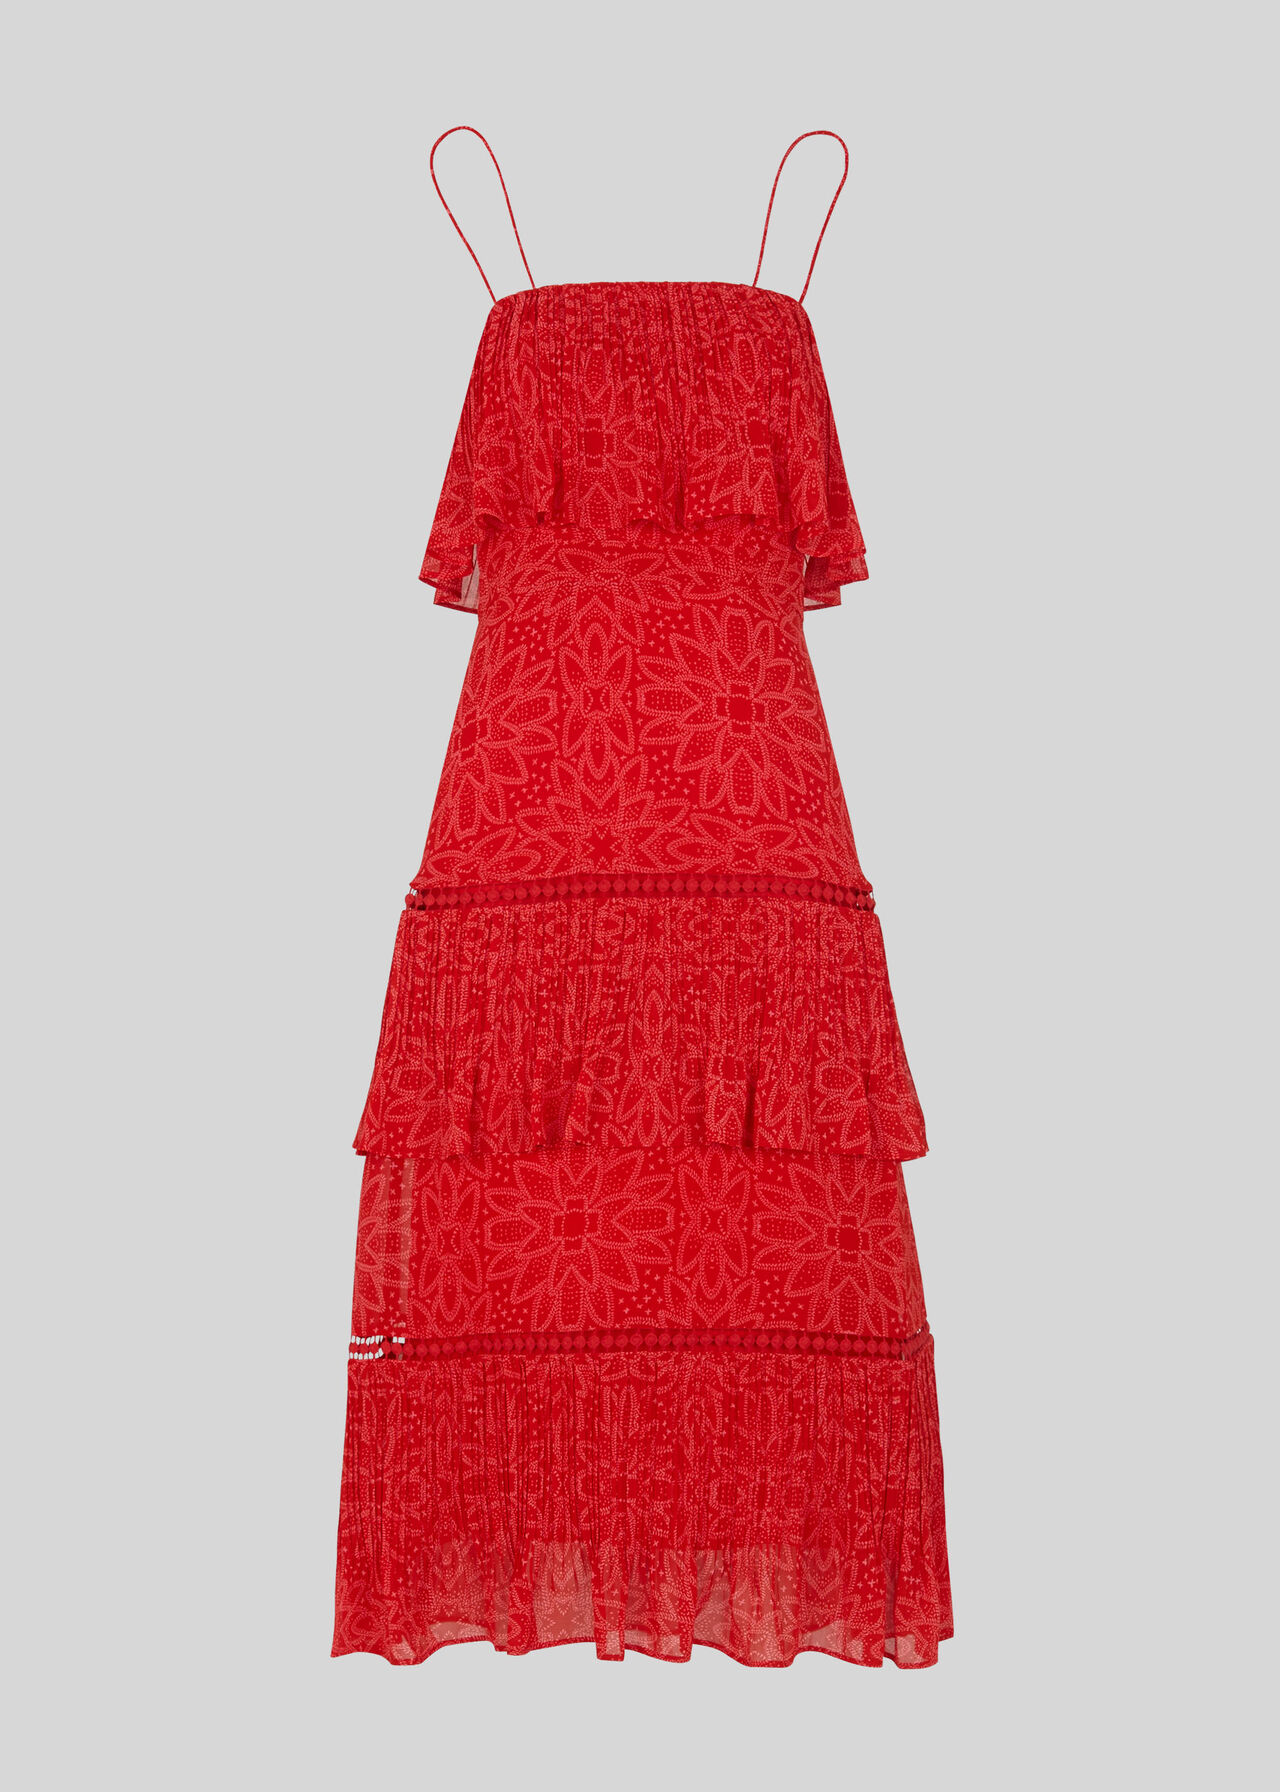 Riya Print Tiered Dress Red/Multi